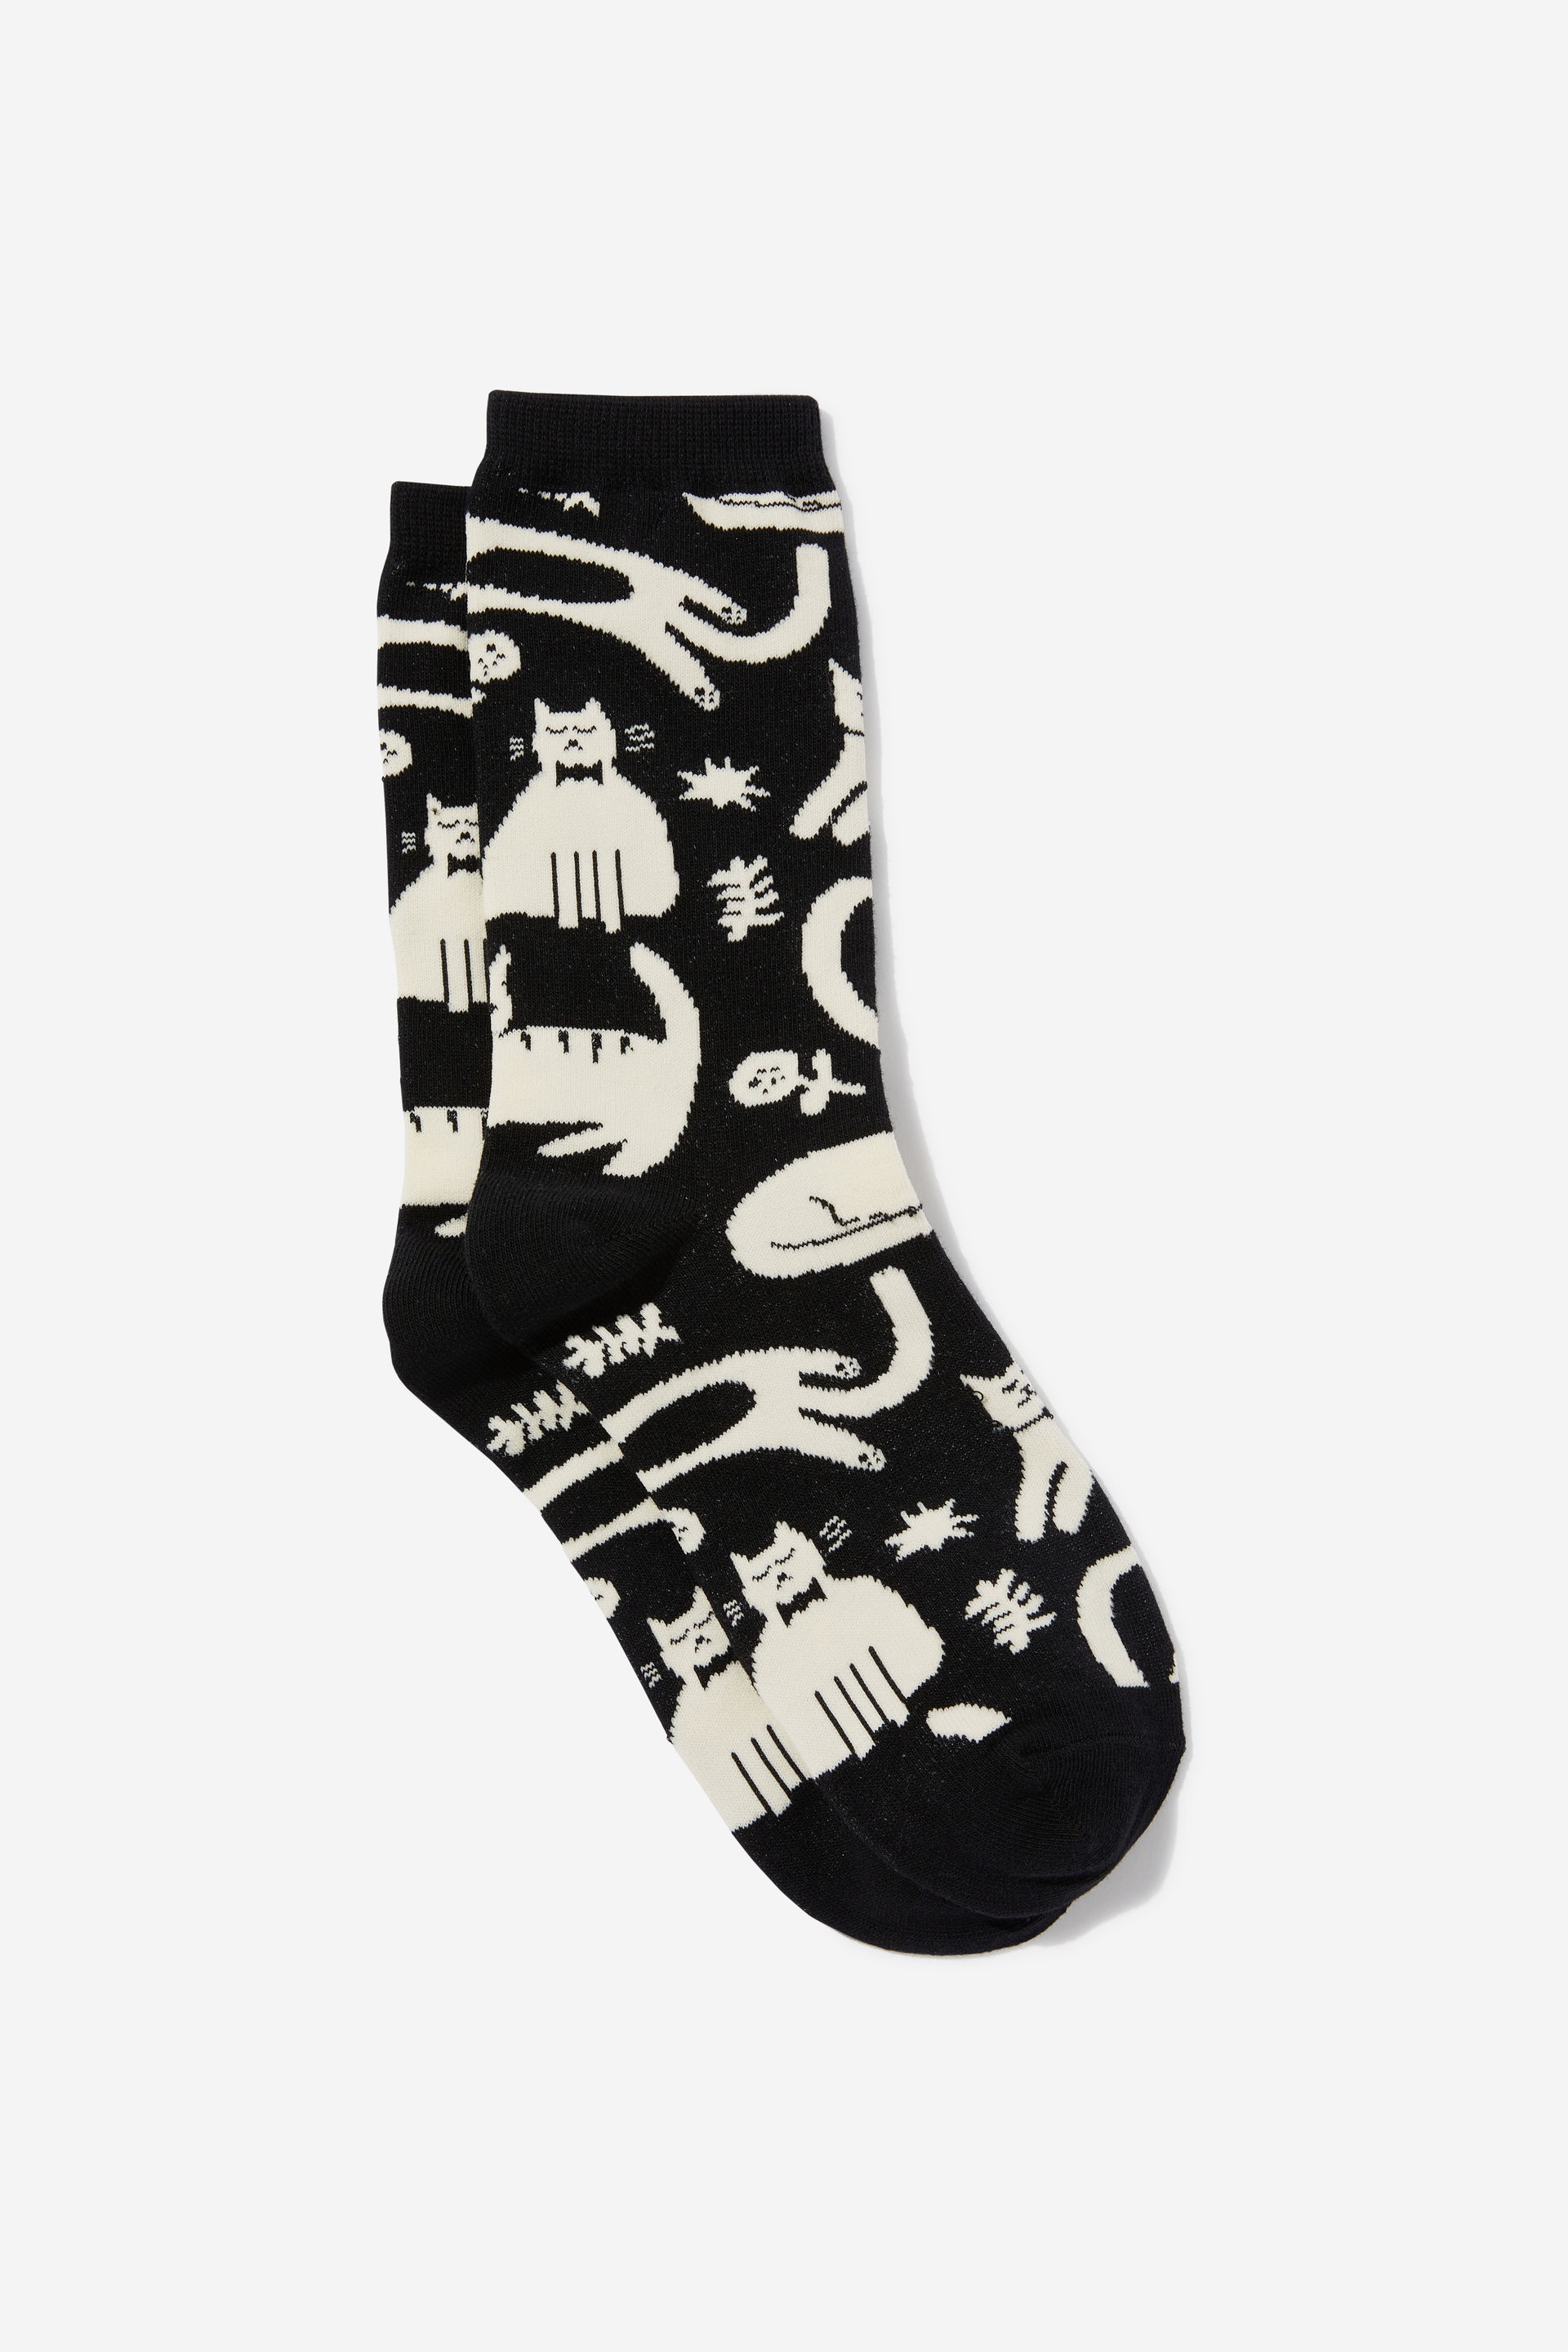 Typo - Socks - Cat ydg